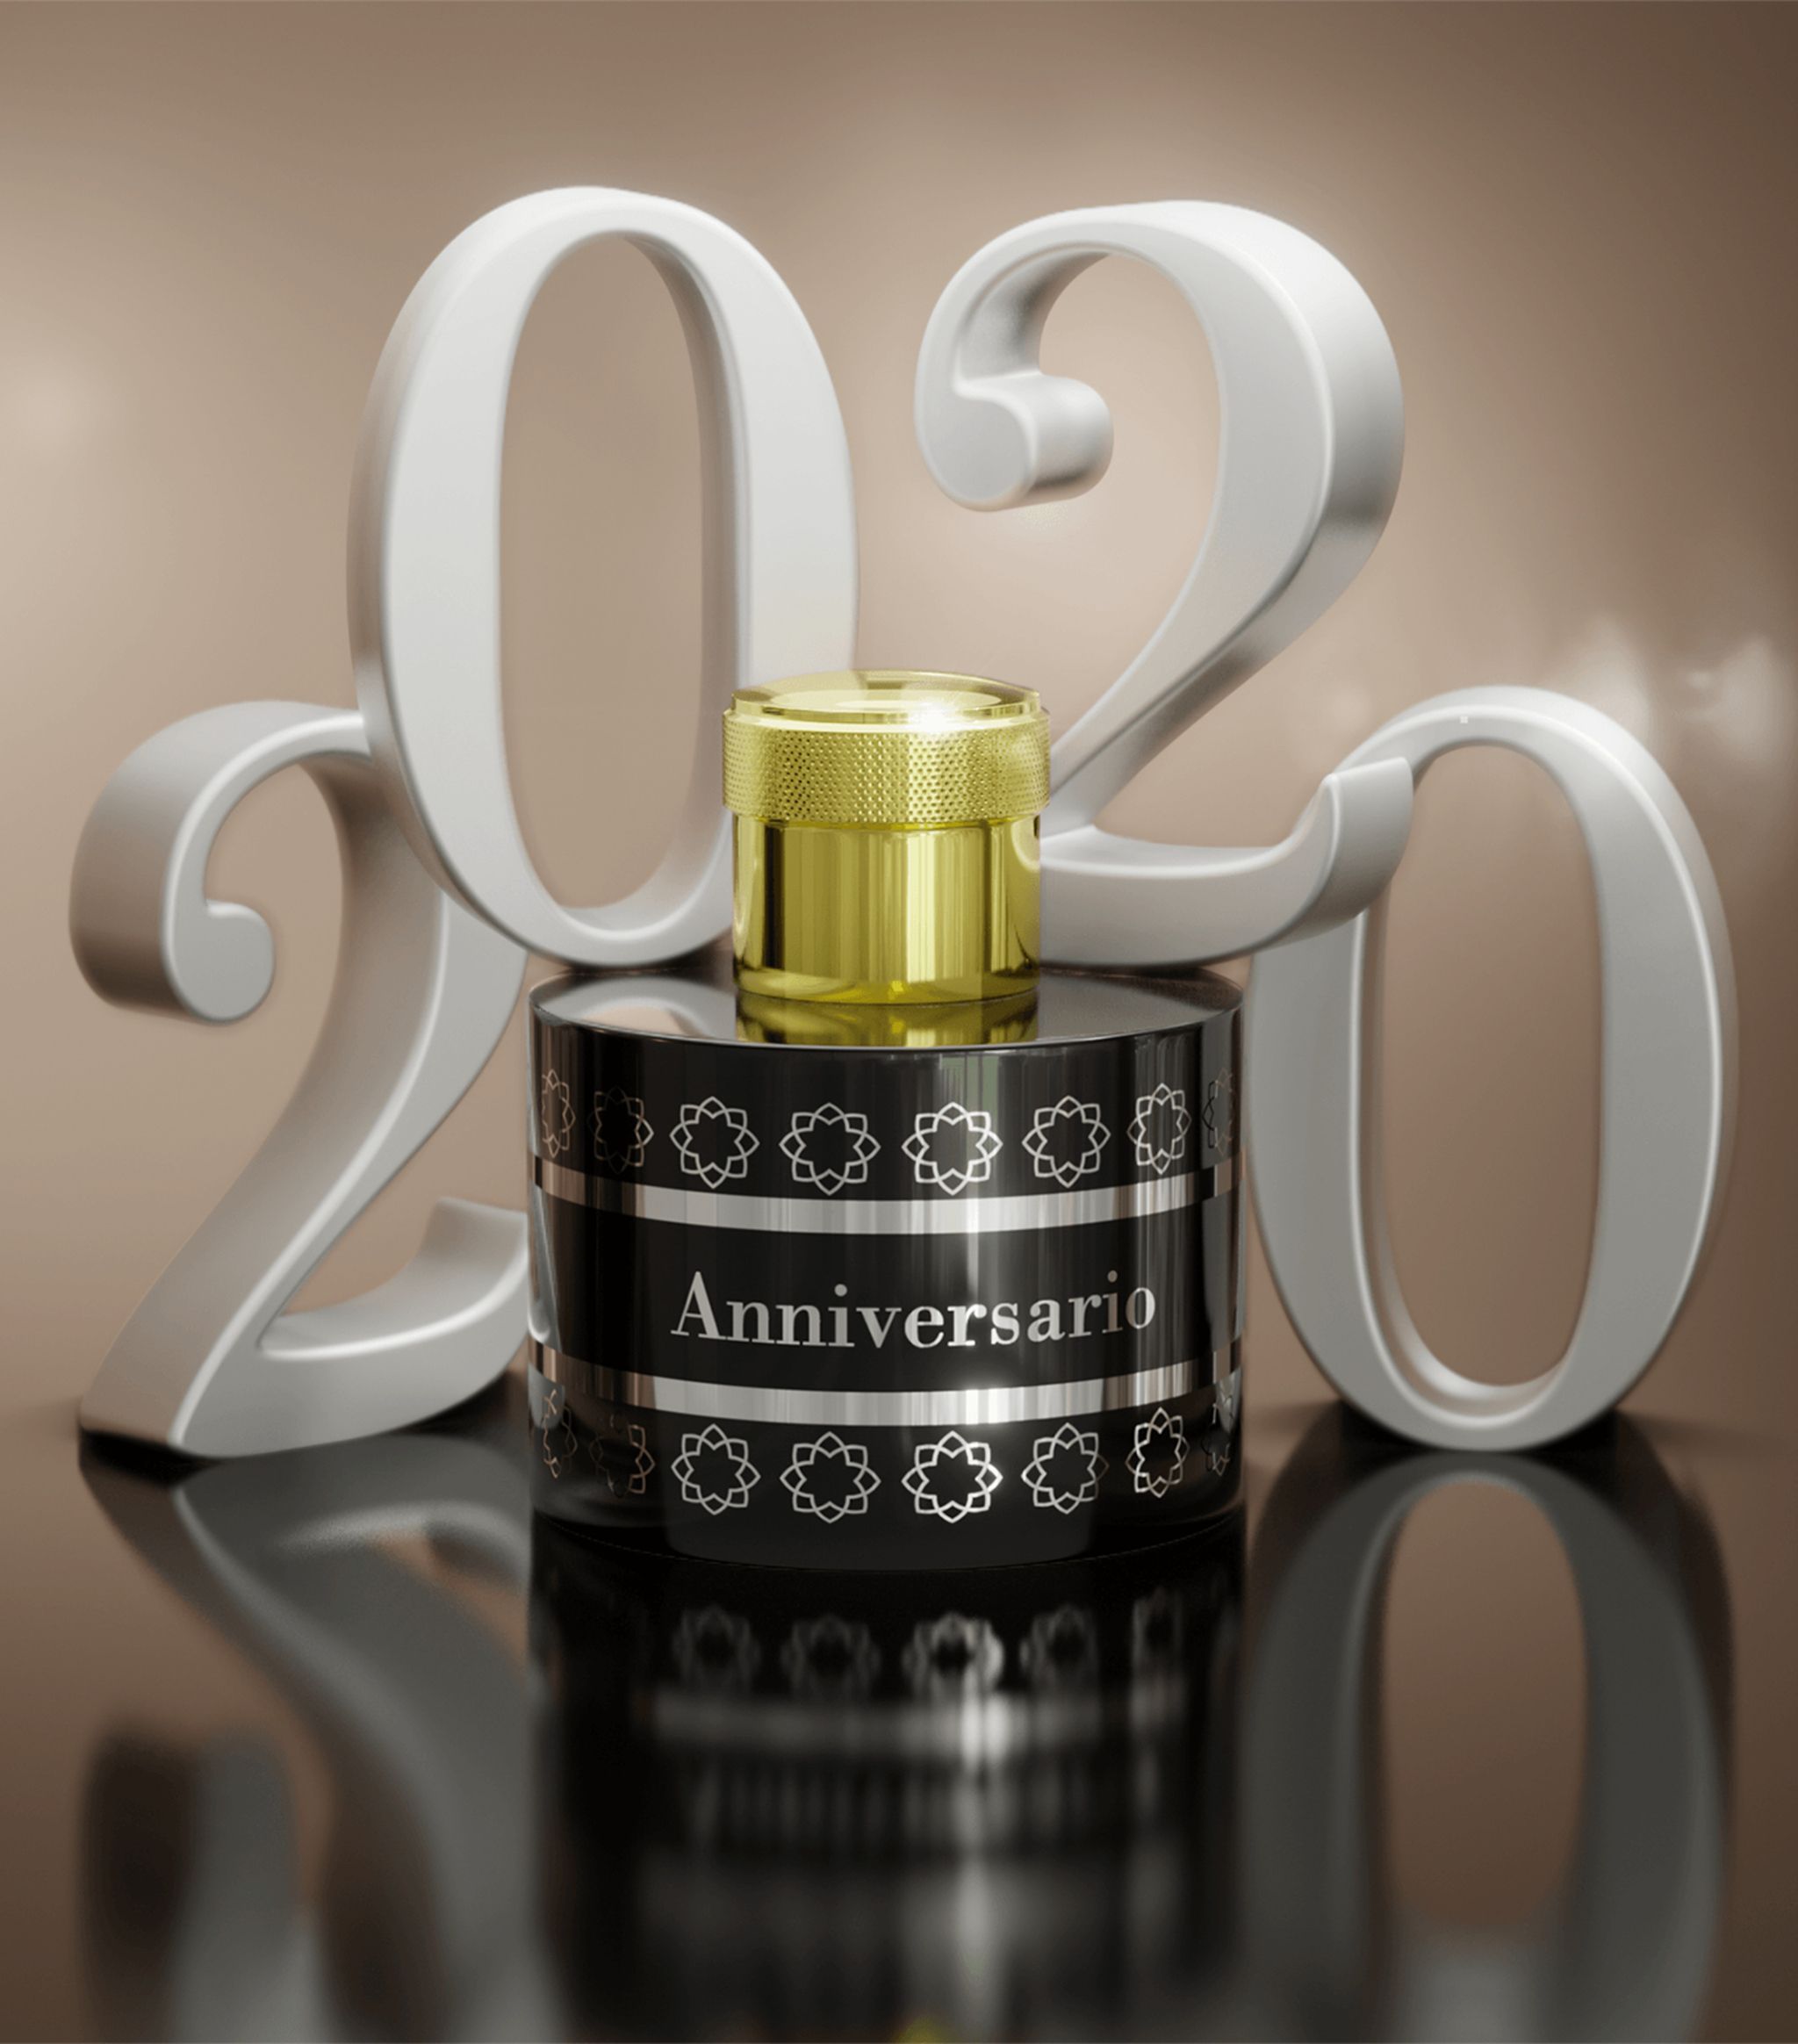 Anniversario Extrait de Parfum (100Ml) Perfumes, Aftershaves & Gift Sets Harrods   